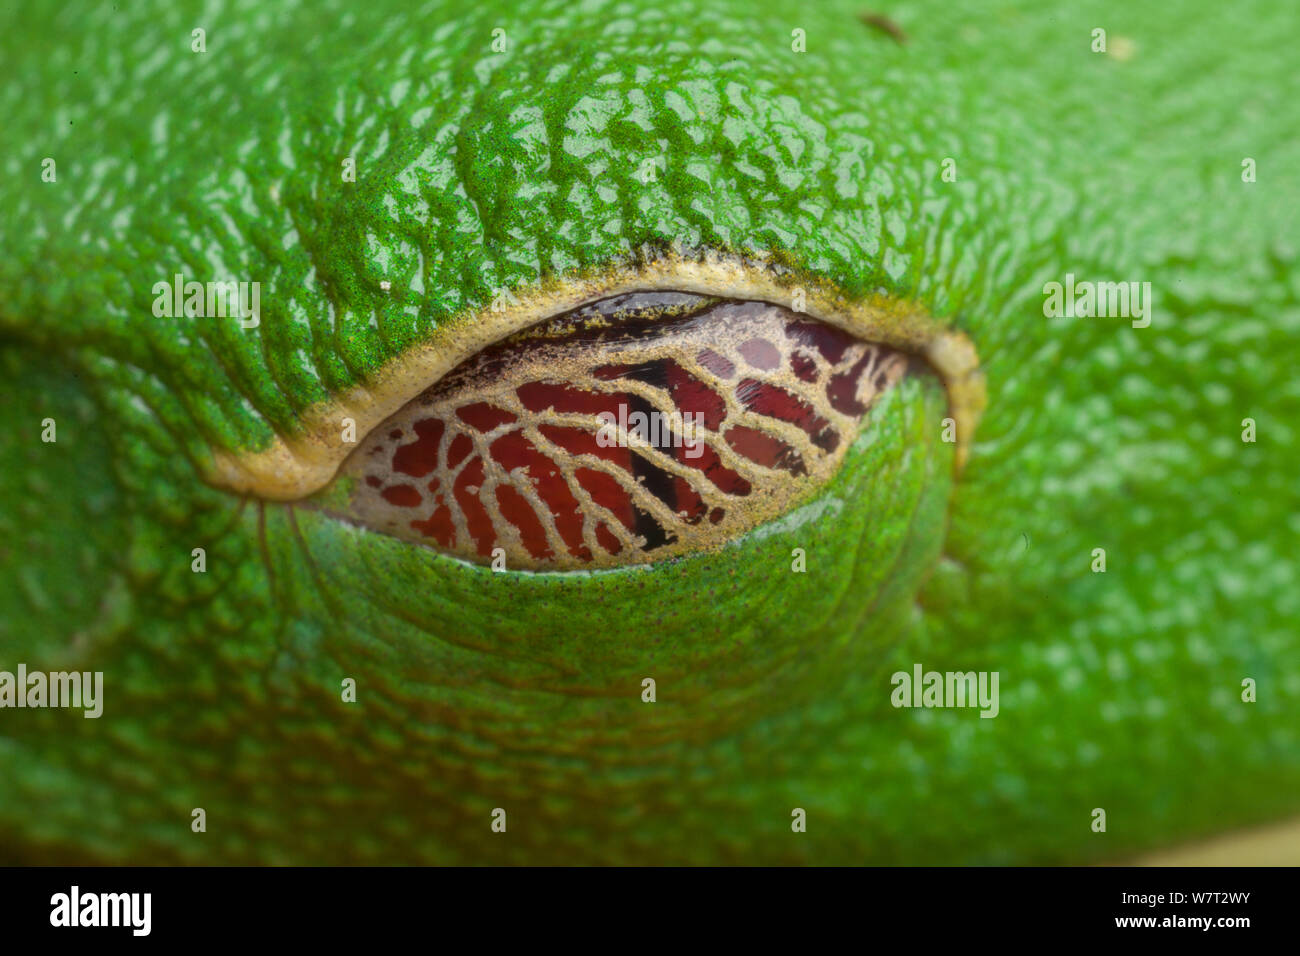 Red-eyed leaf frog (Agalychnis callidryas) close-up of eye showing patterned lower eyelid. Stock Photo